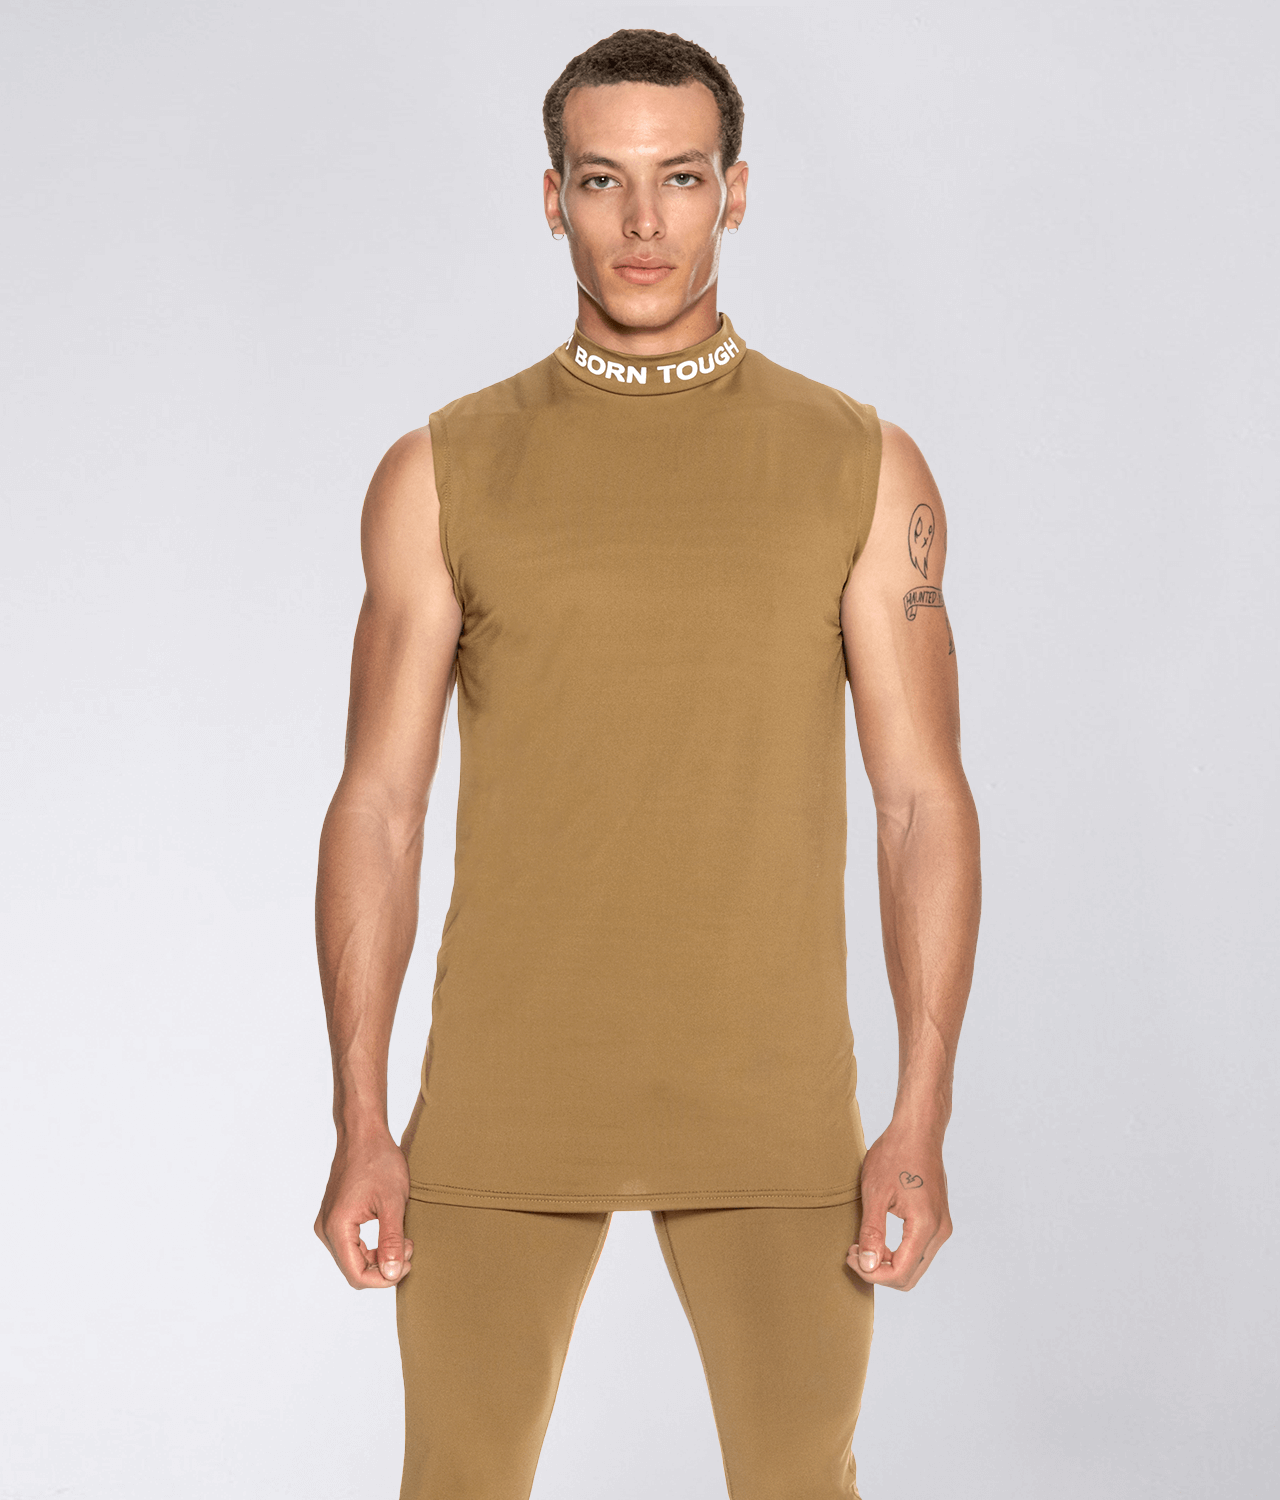 Born Tough Mock Neck Sleeveless Khaki Running Base Layer Shirt For Men